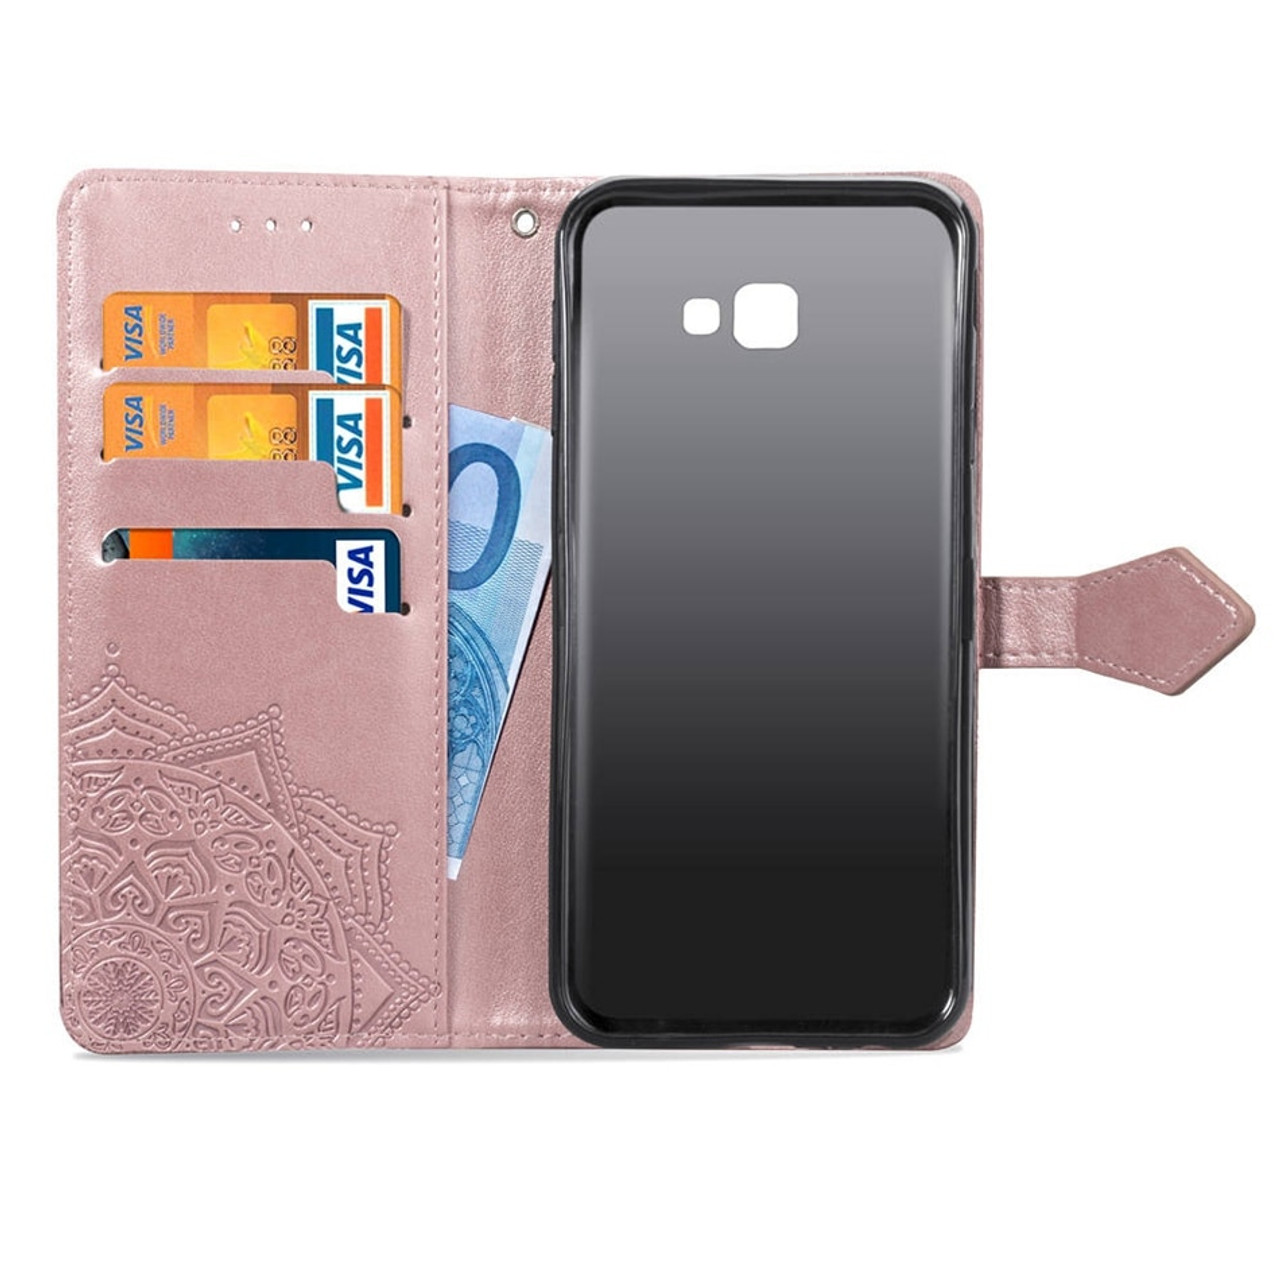 Tosim Galaxy J4 2018 Hülle Klappbar Leder TOSDA030241 Lila Brieftasche Handyhülle Klapphülle mit Kartenhalter Stossfest Lederhülle für Samsung Galaxy J4 